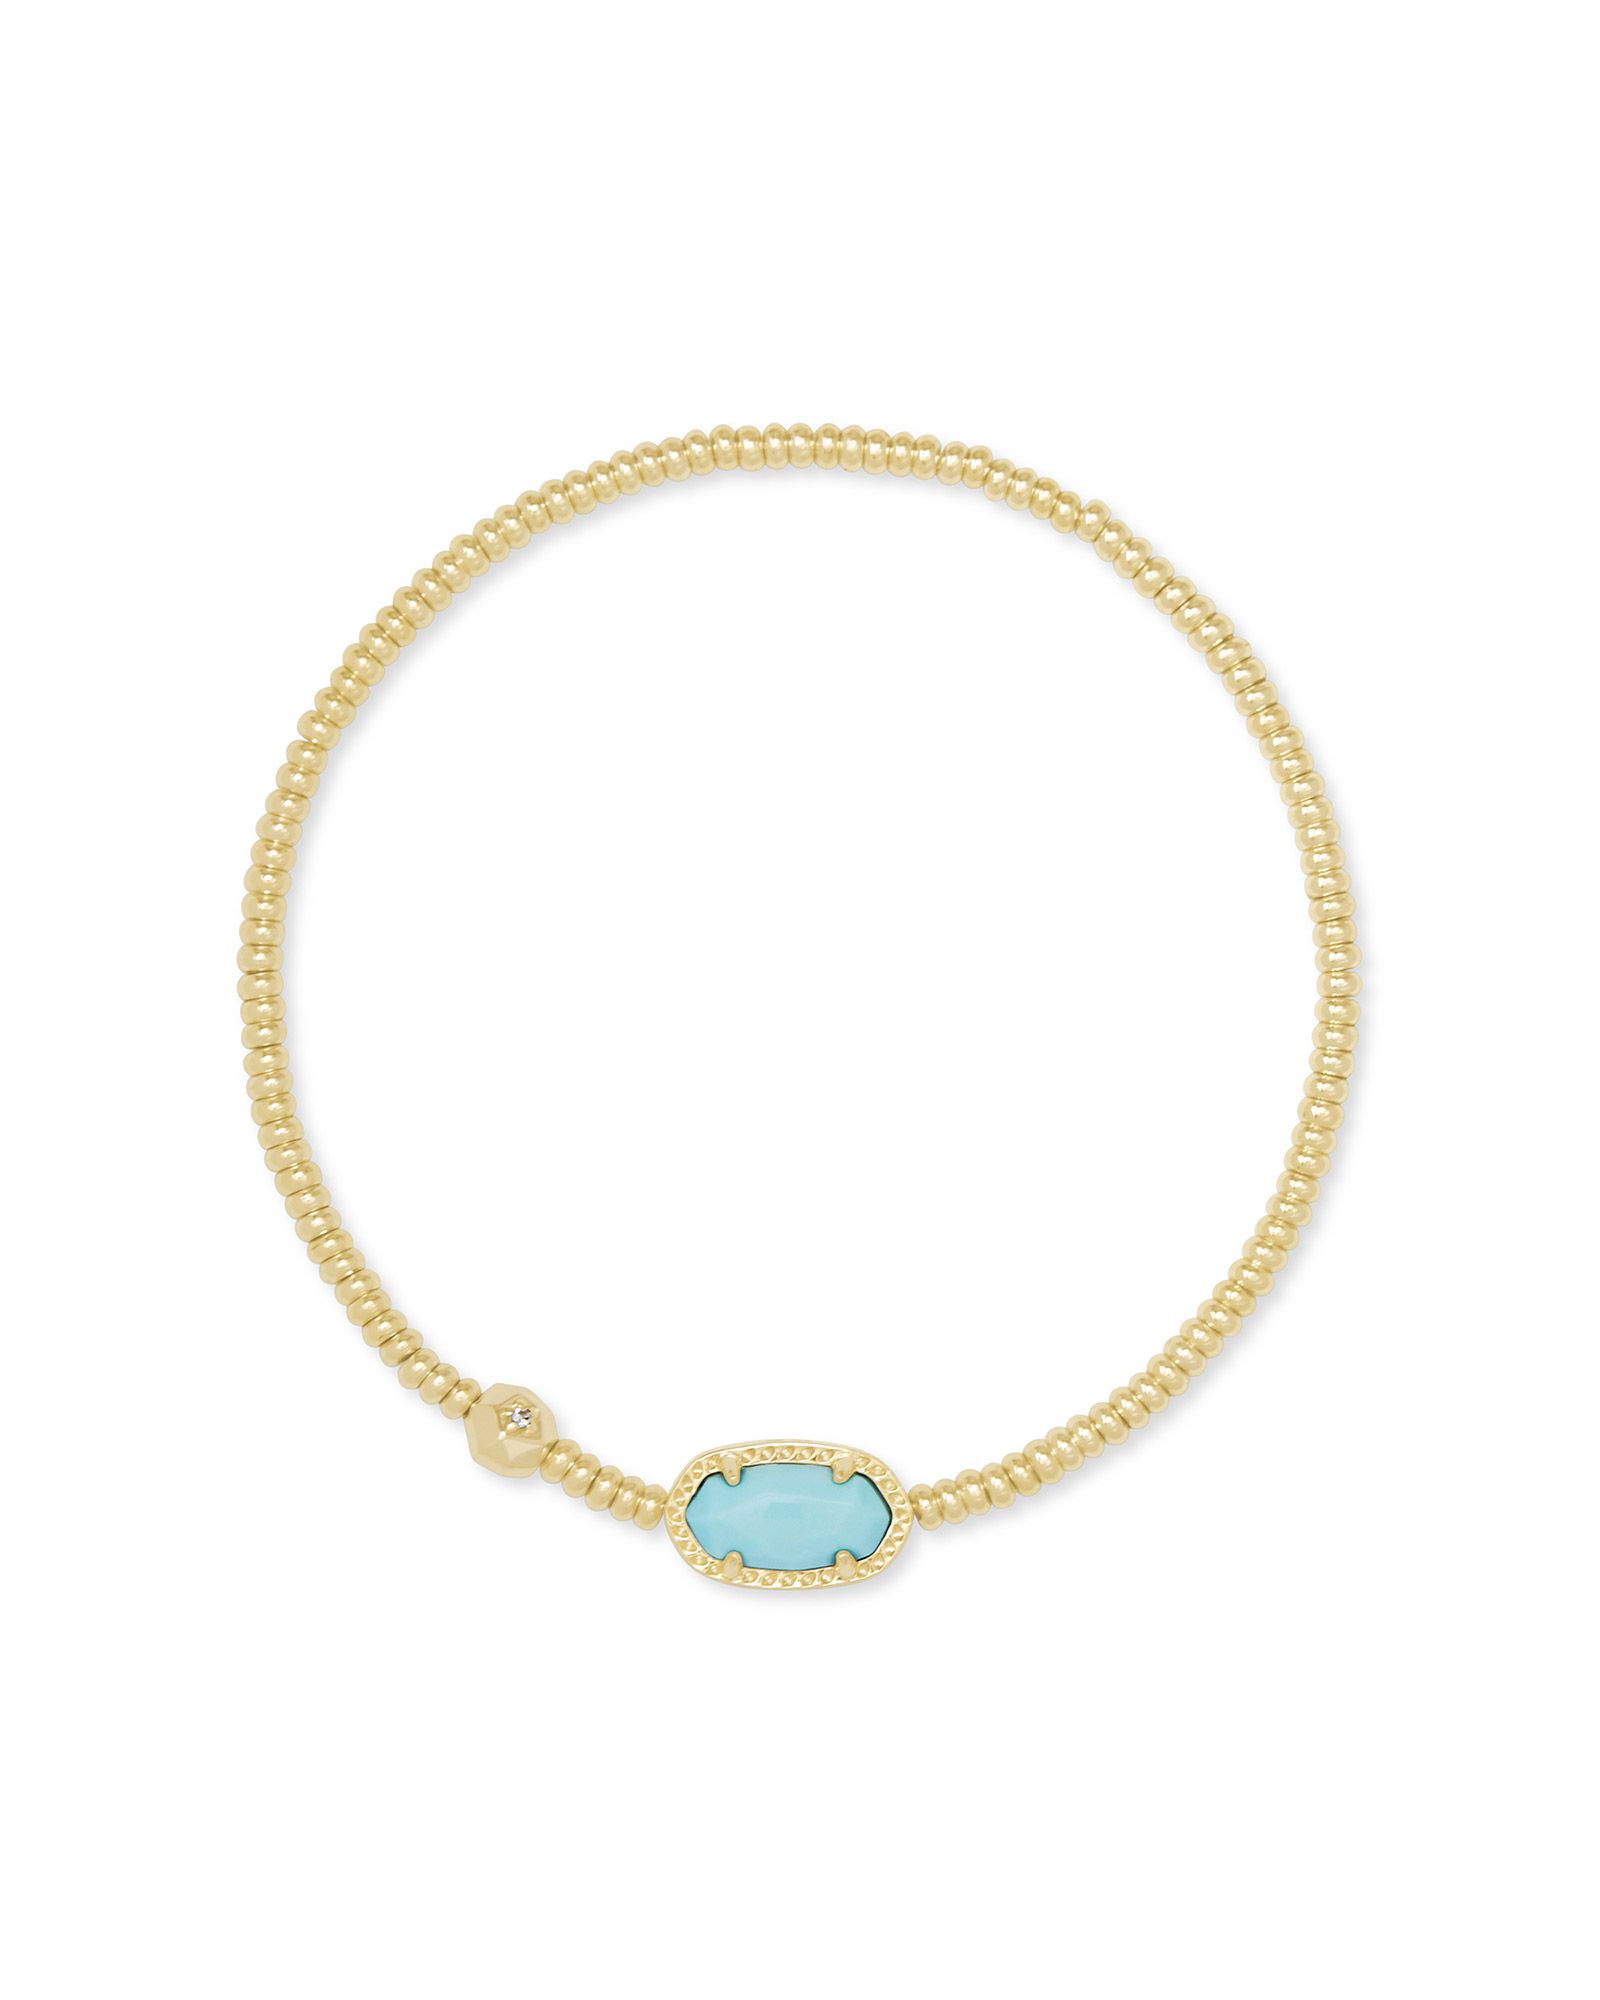 Grayson Gold Stretch Bracelet in Light Blue Magnesite | Kendra Scott